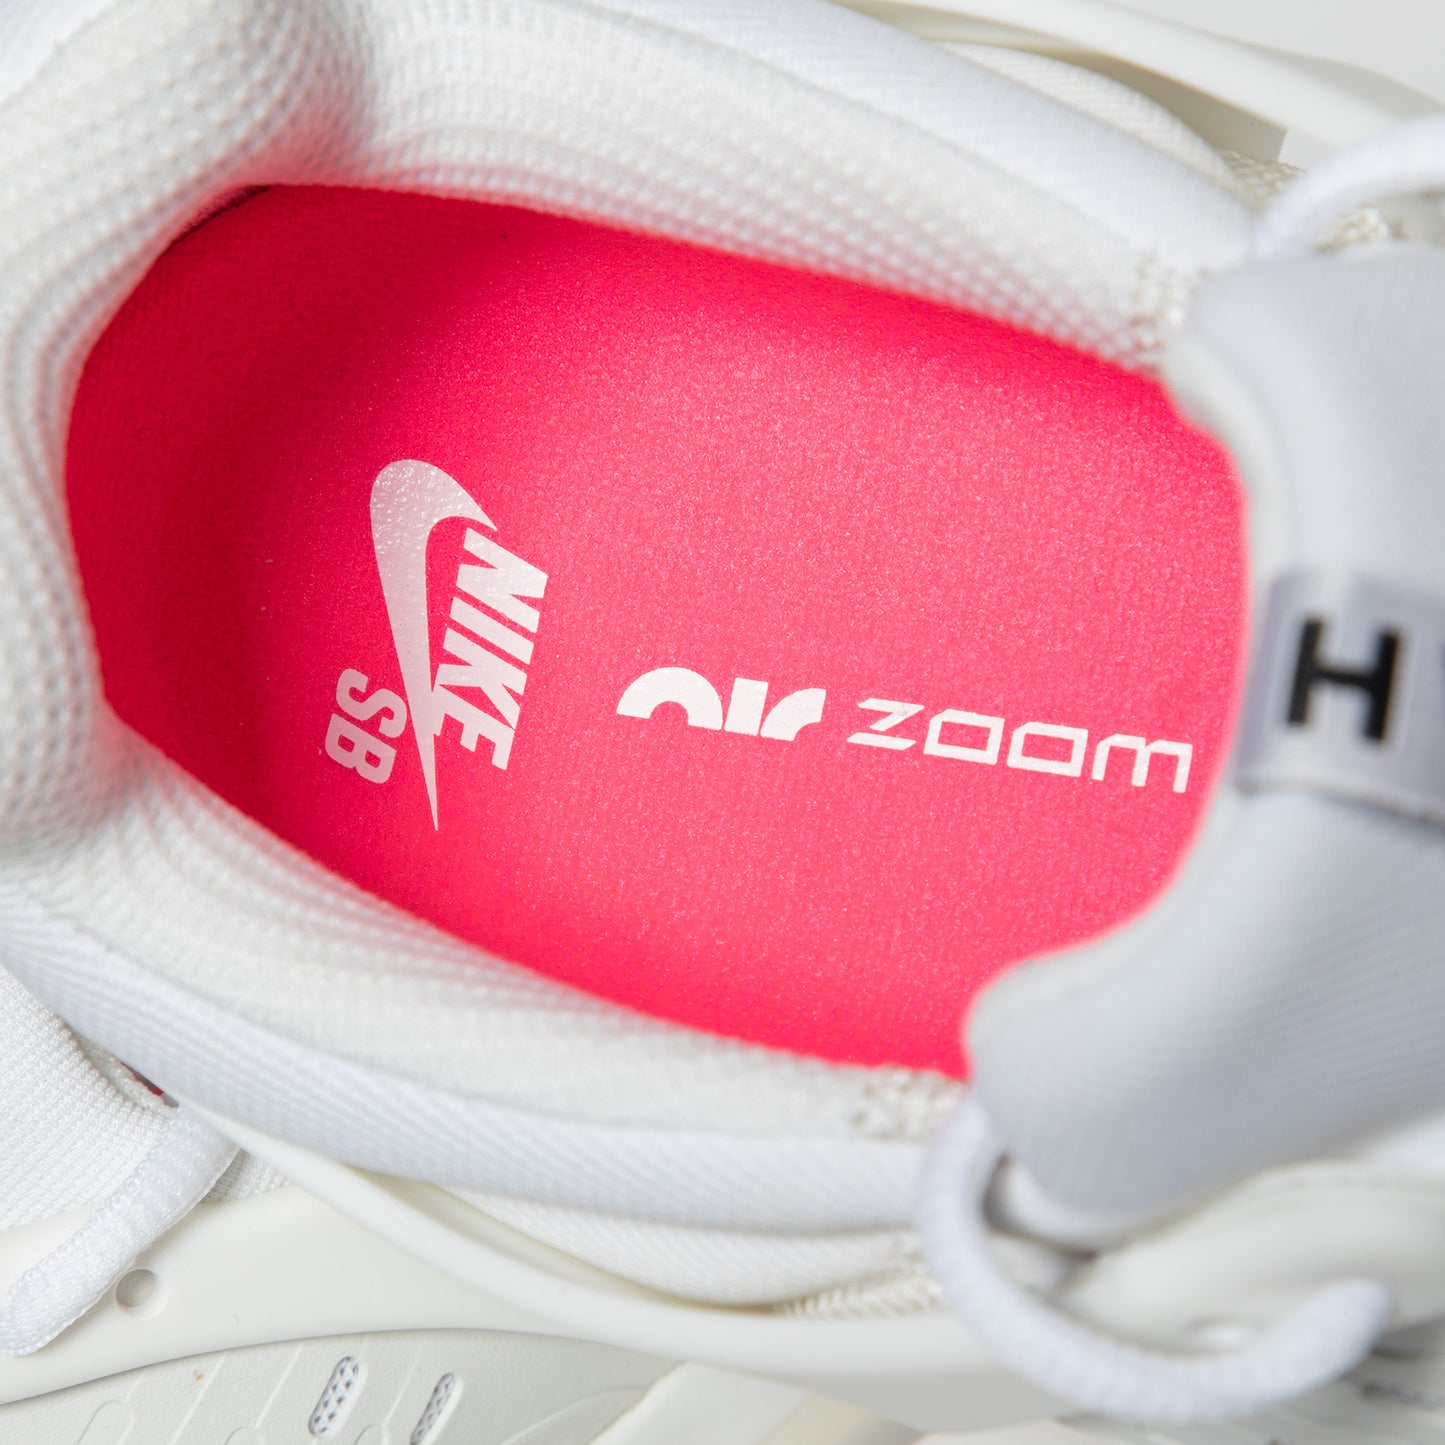 Nike SB Zoom Nyjah 3 (White/Black/Summit White/Hyper Pink)